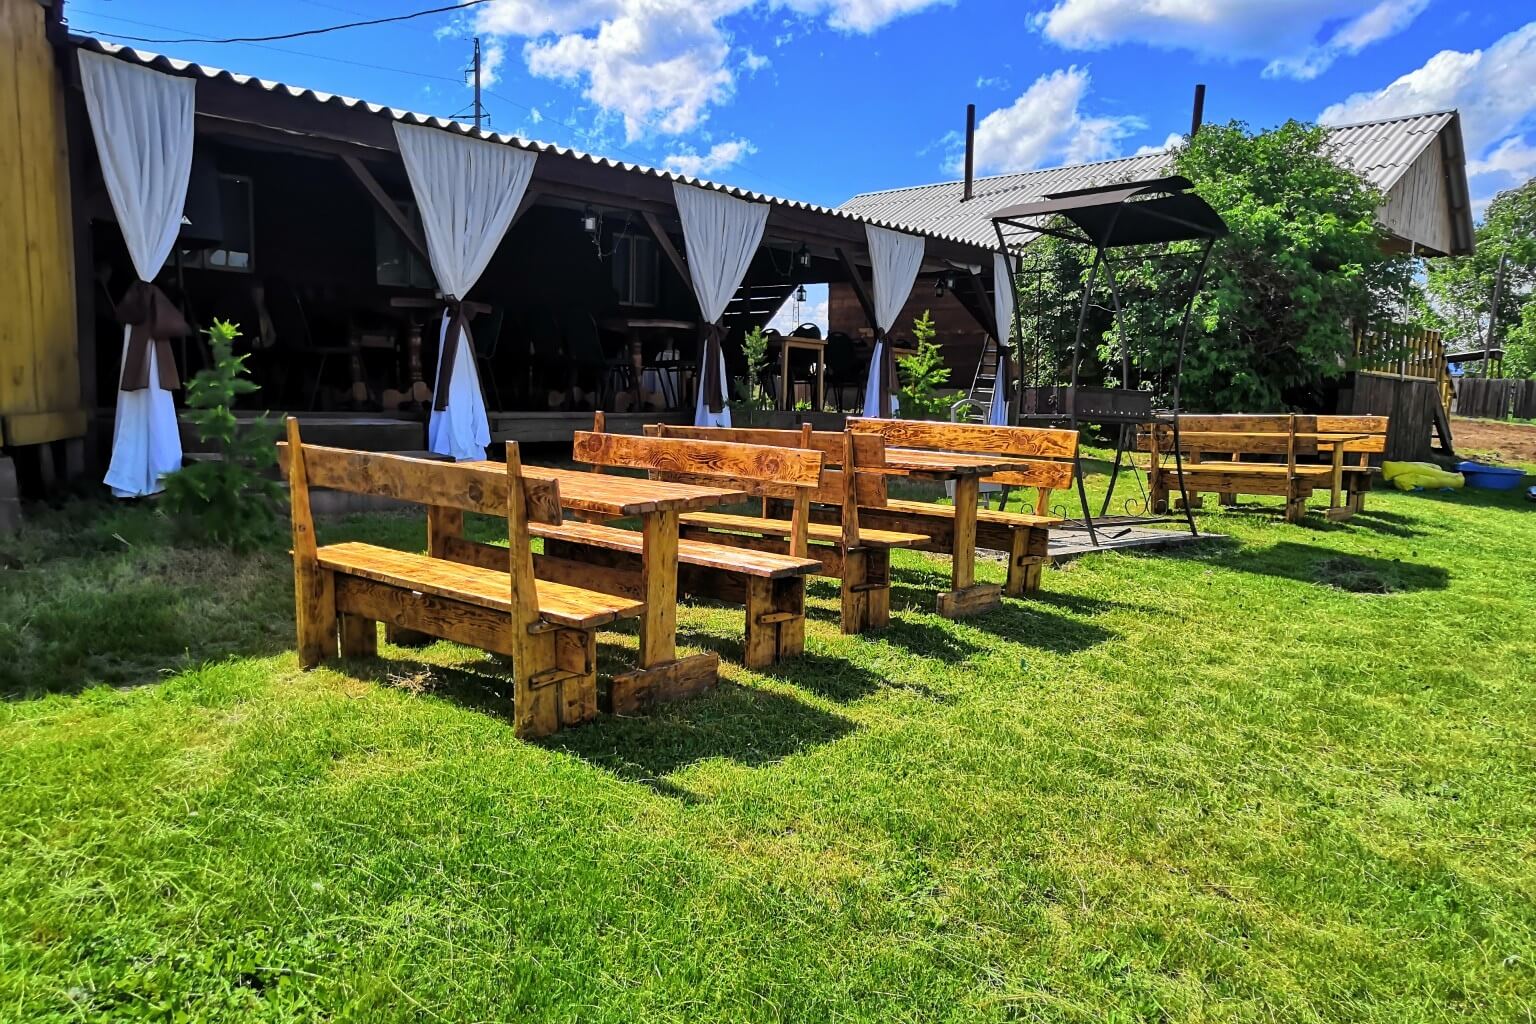 Кафе-терраса, лавочки и столики на зеленом газоне.